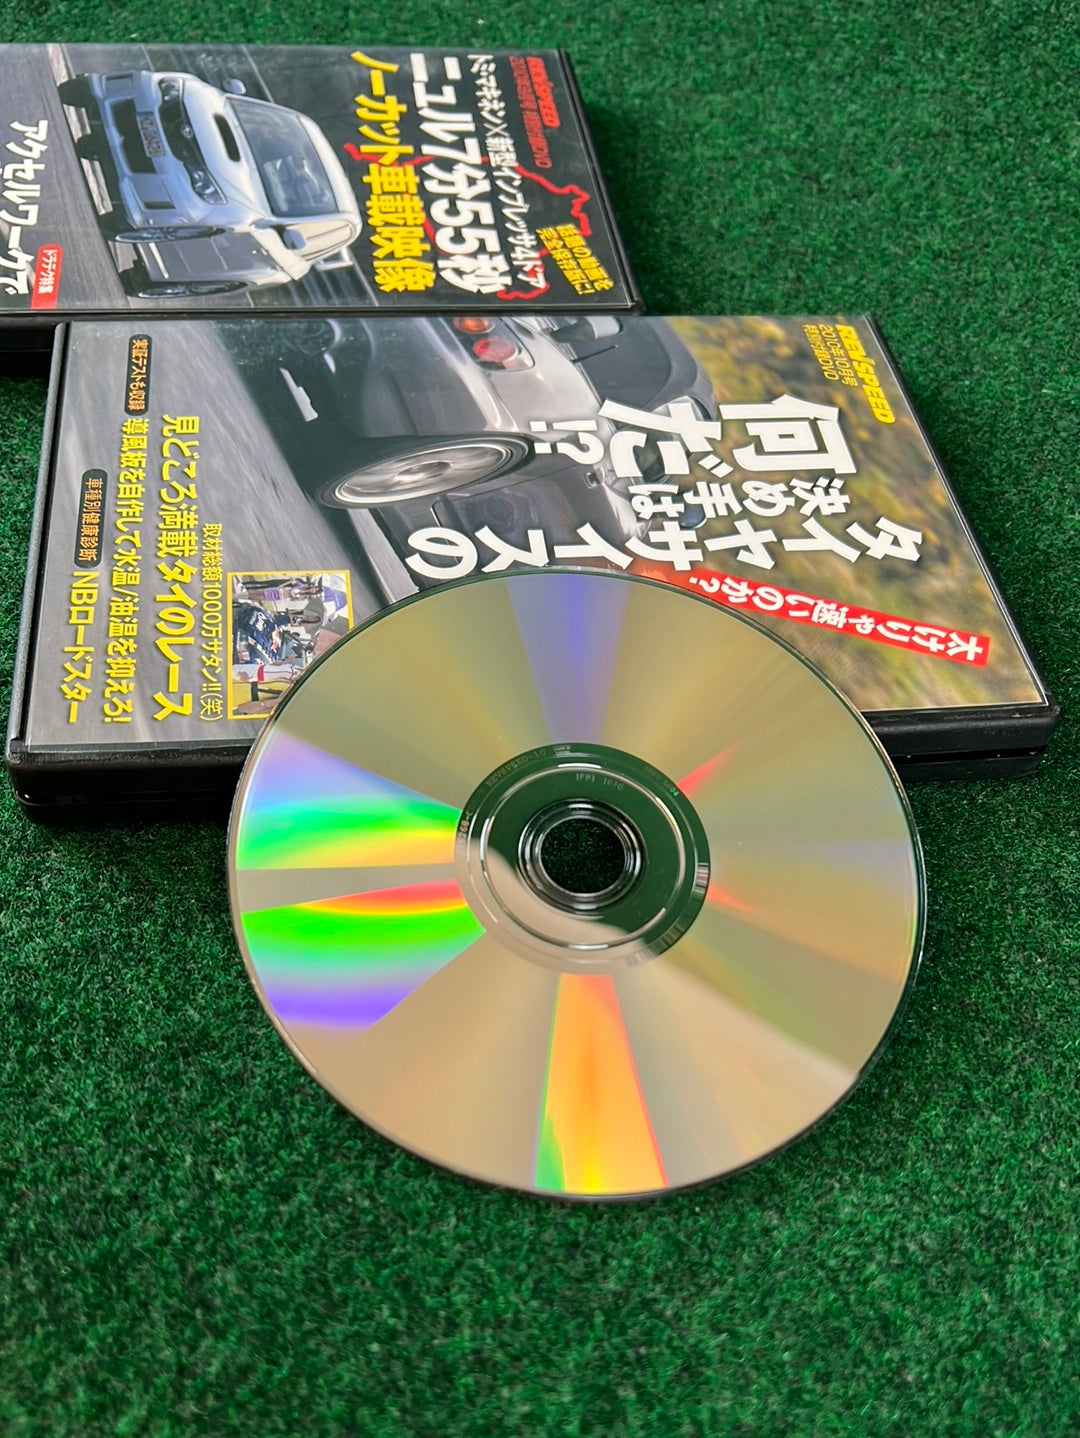 REVSPEED DVD - Vol. 17 & 18 Set of 2